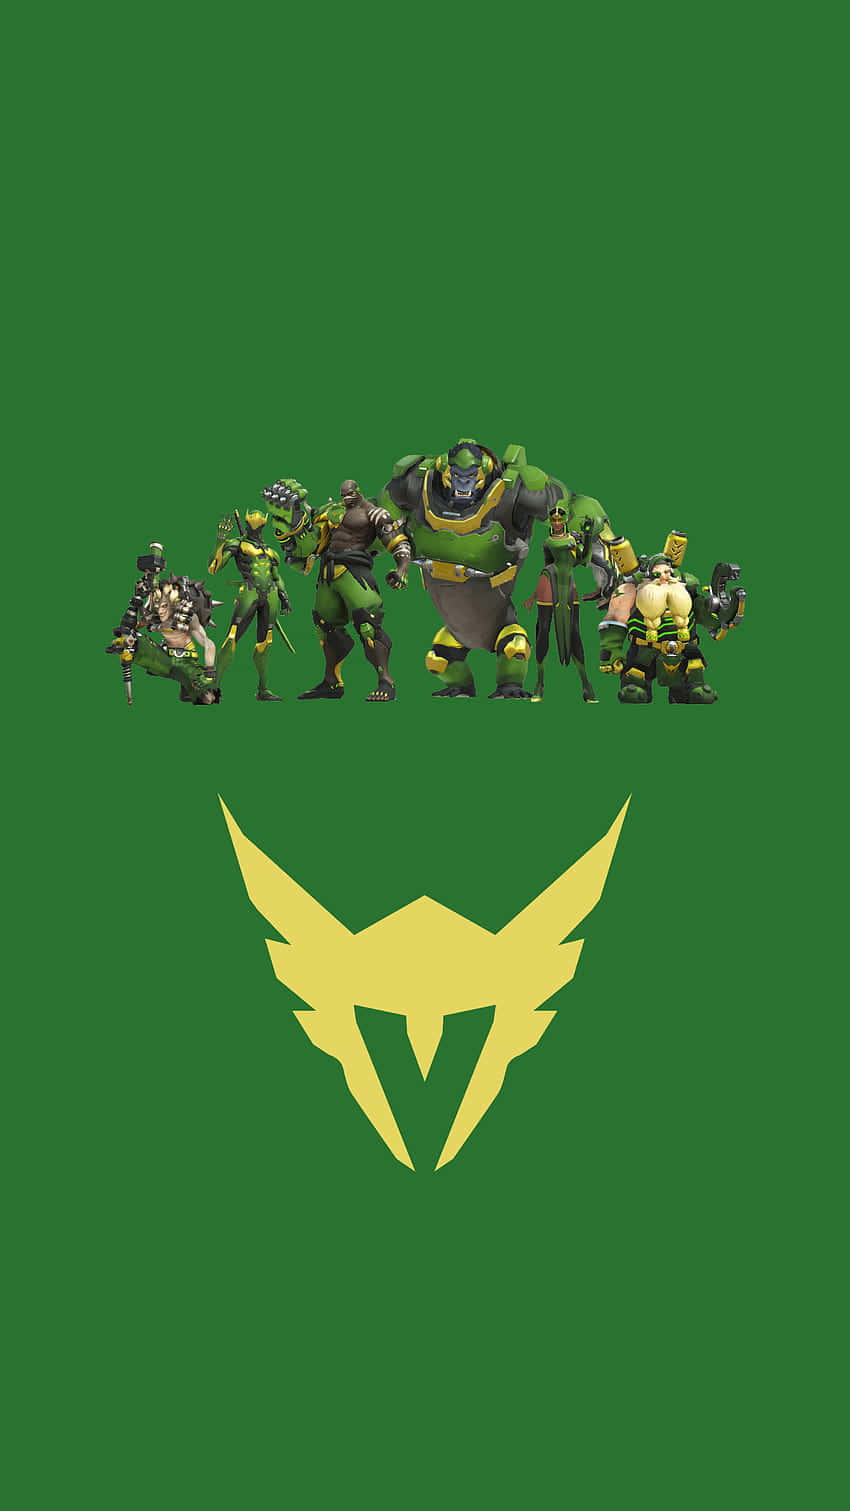 Overwatch League Teams Logos Wallpaper